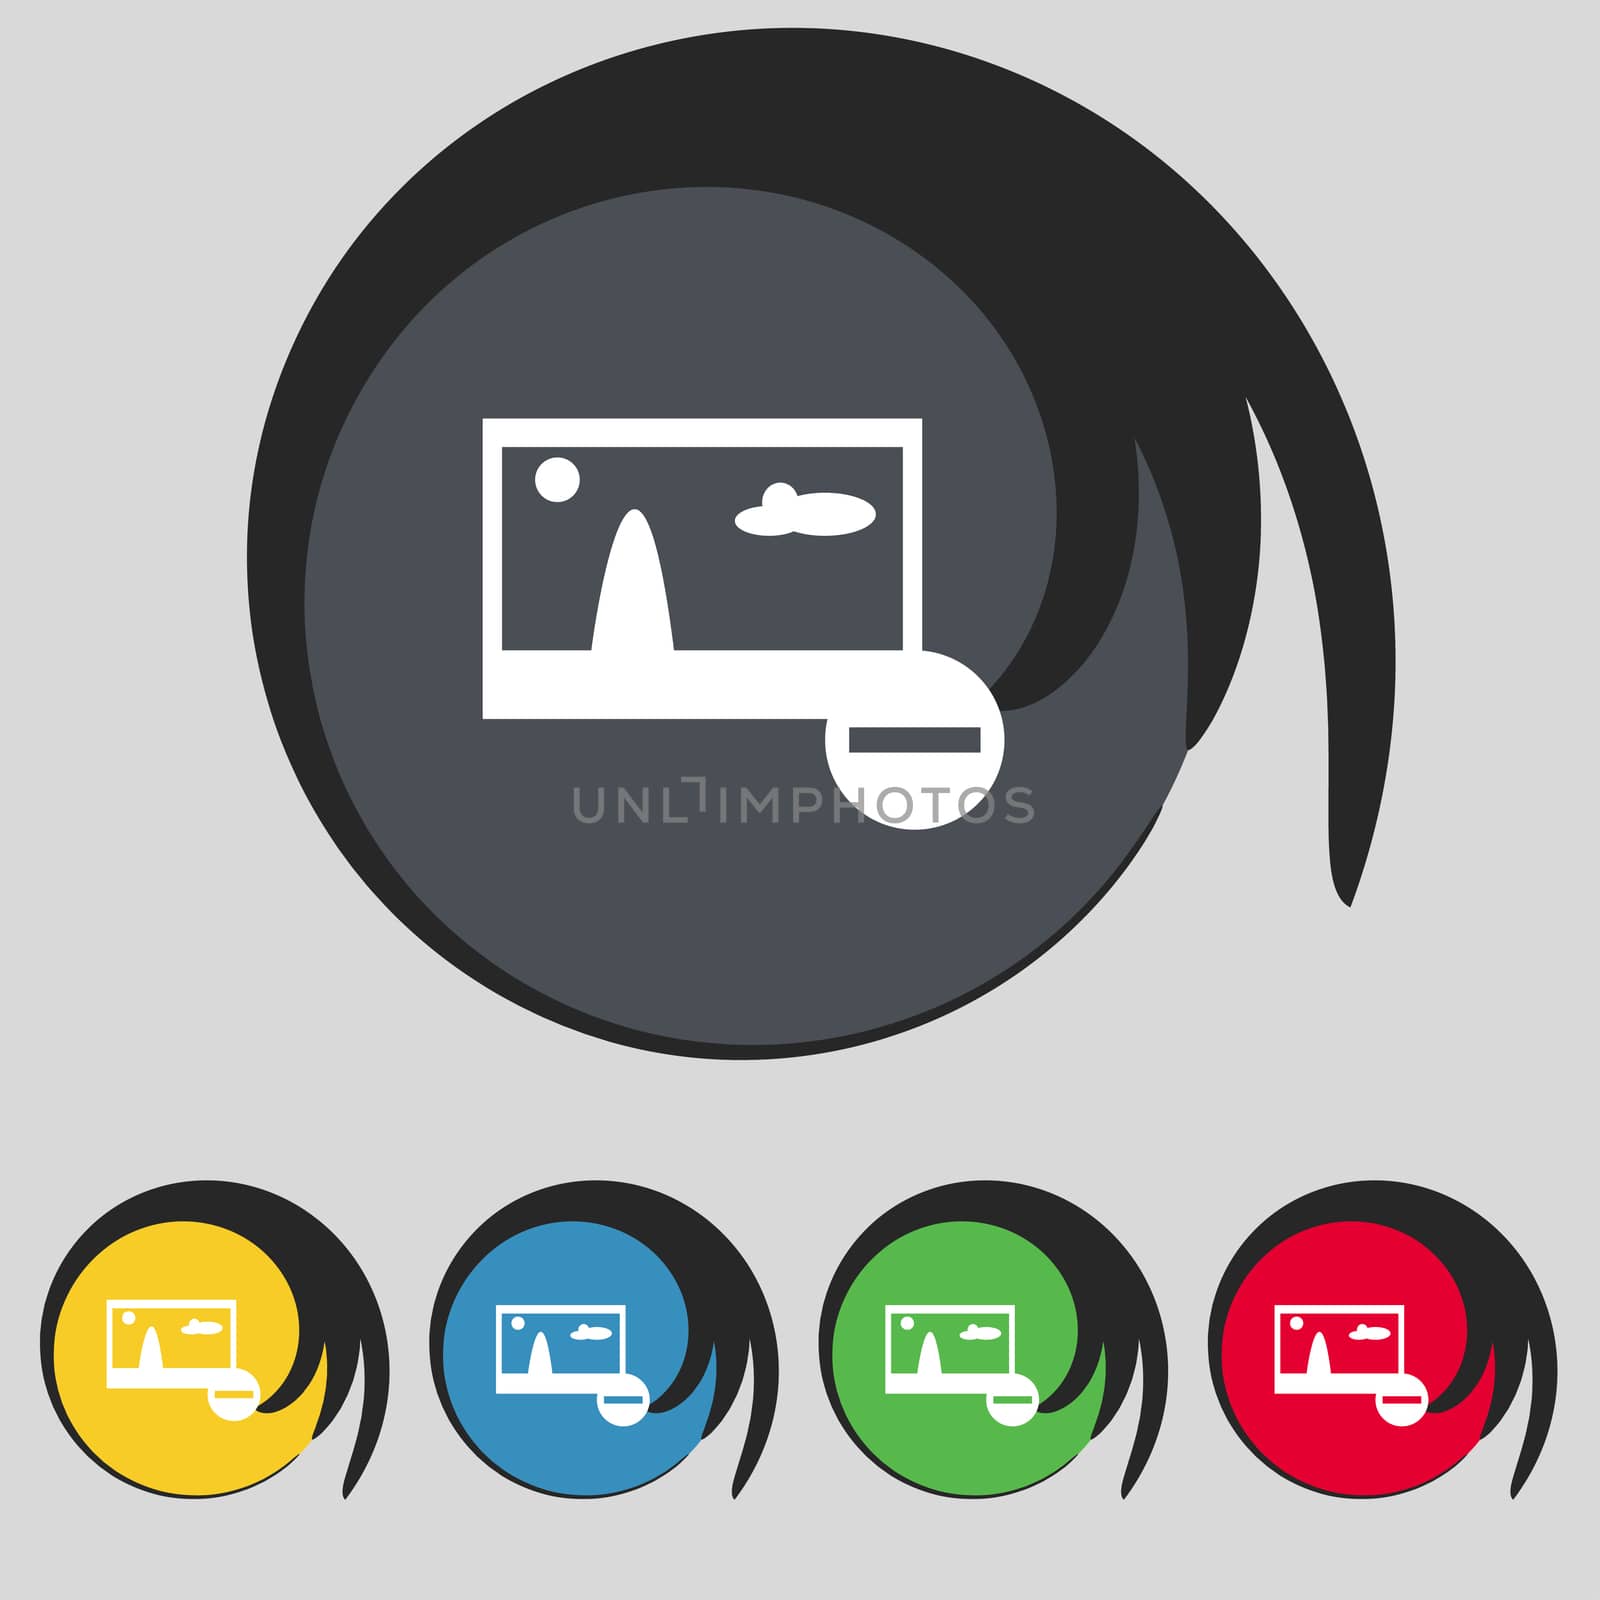 minus File JPG sign icon. Download image file symbol. Set colourful buttons. Modern UI website navigation  by serhii_lohvyniuk